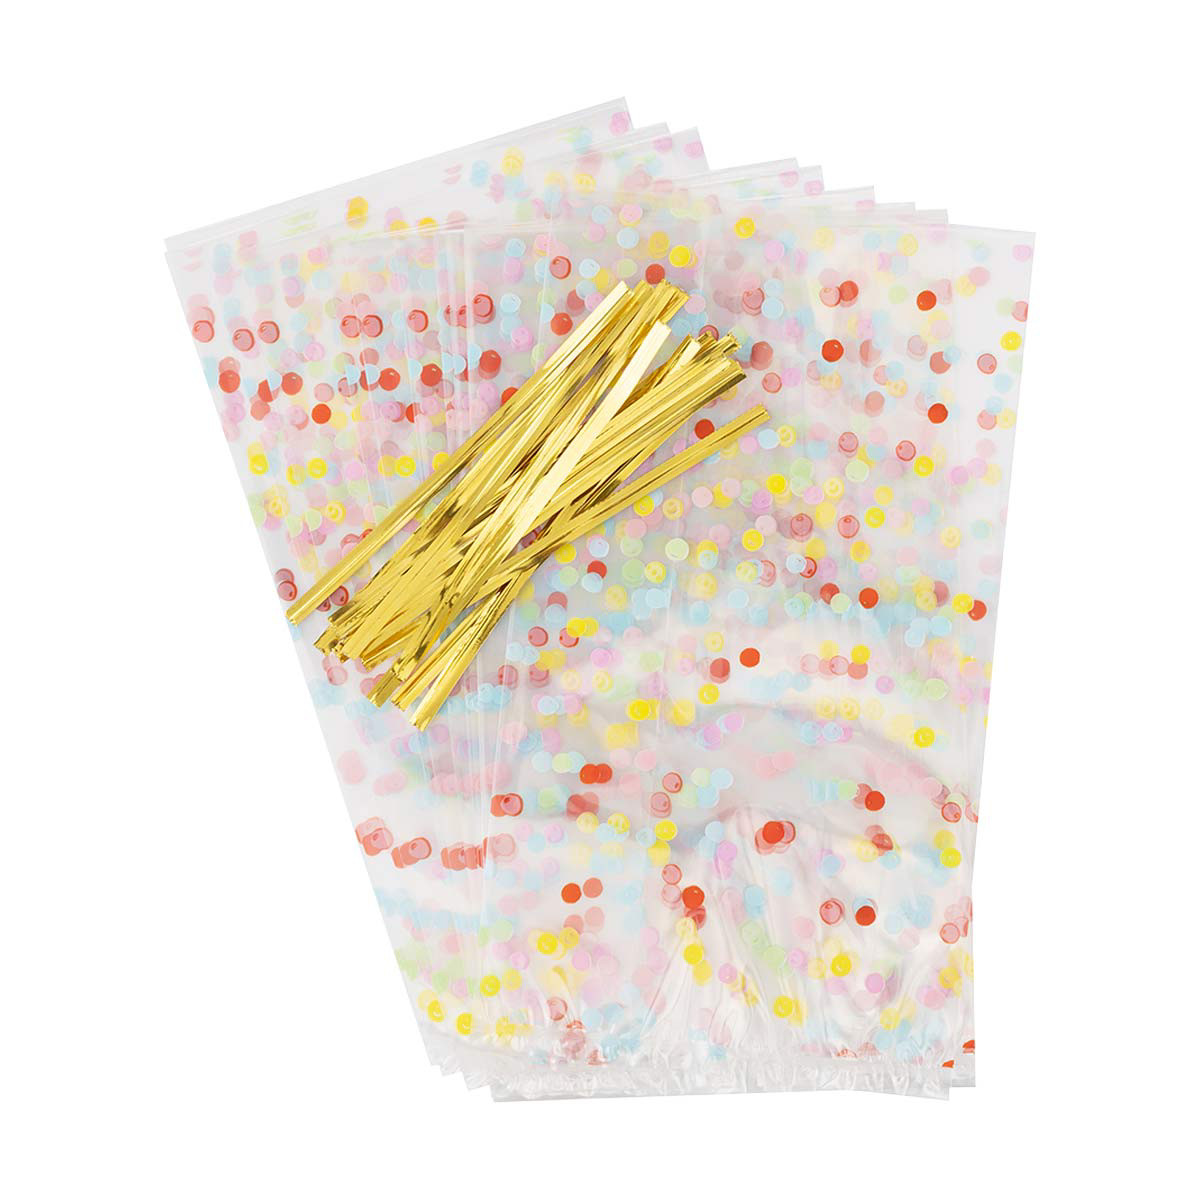 Sweetshop Treat Bags, Rainbow Dots, 15 Pieces